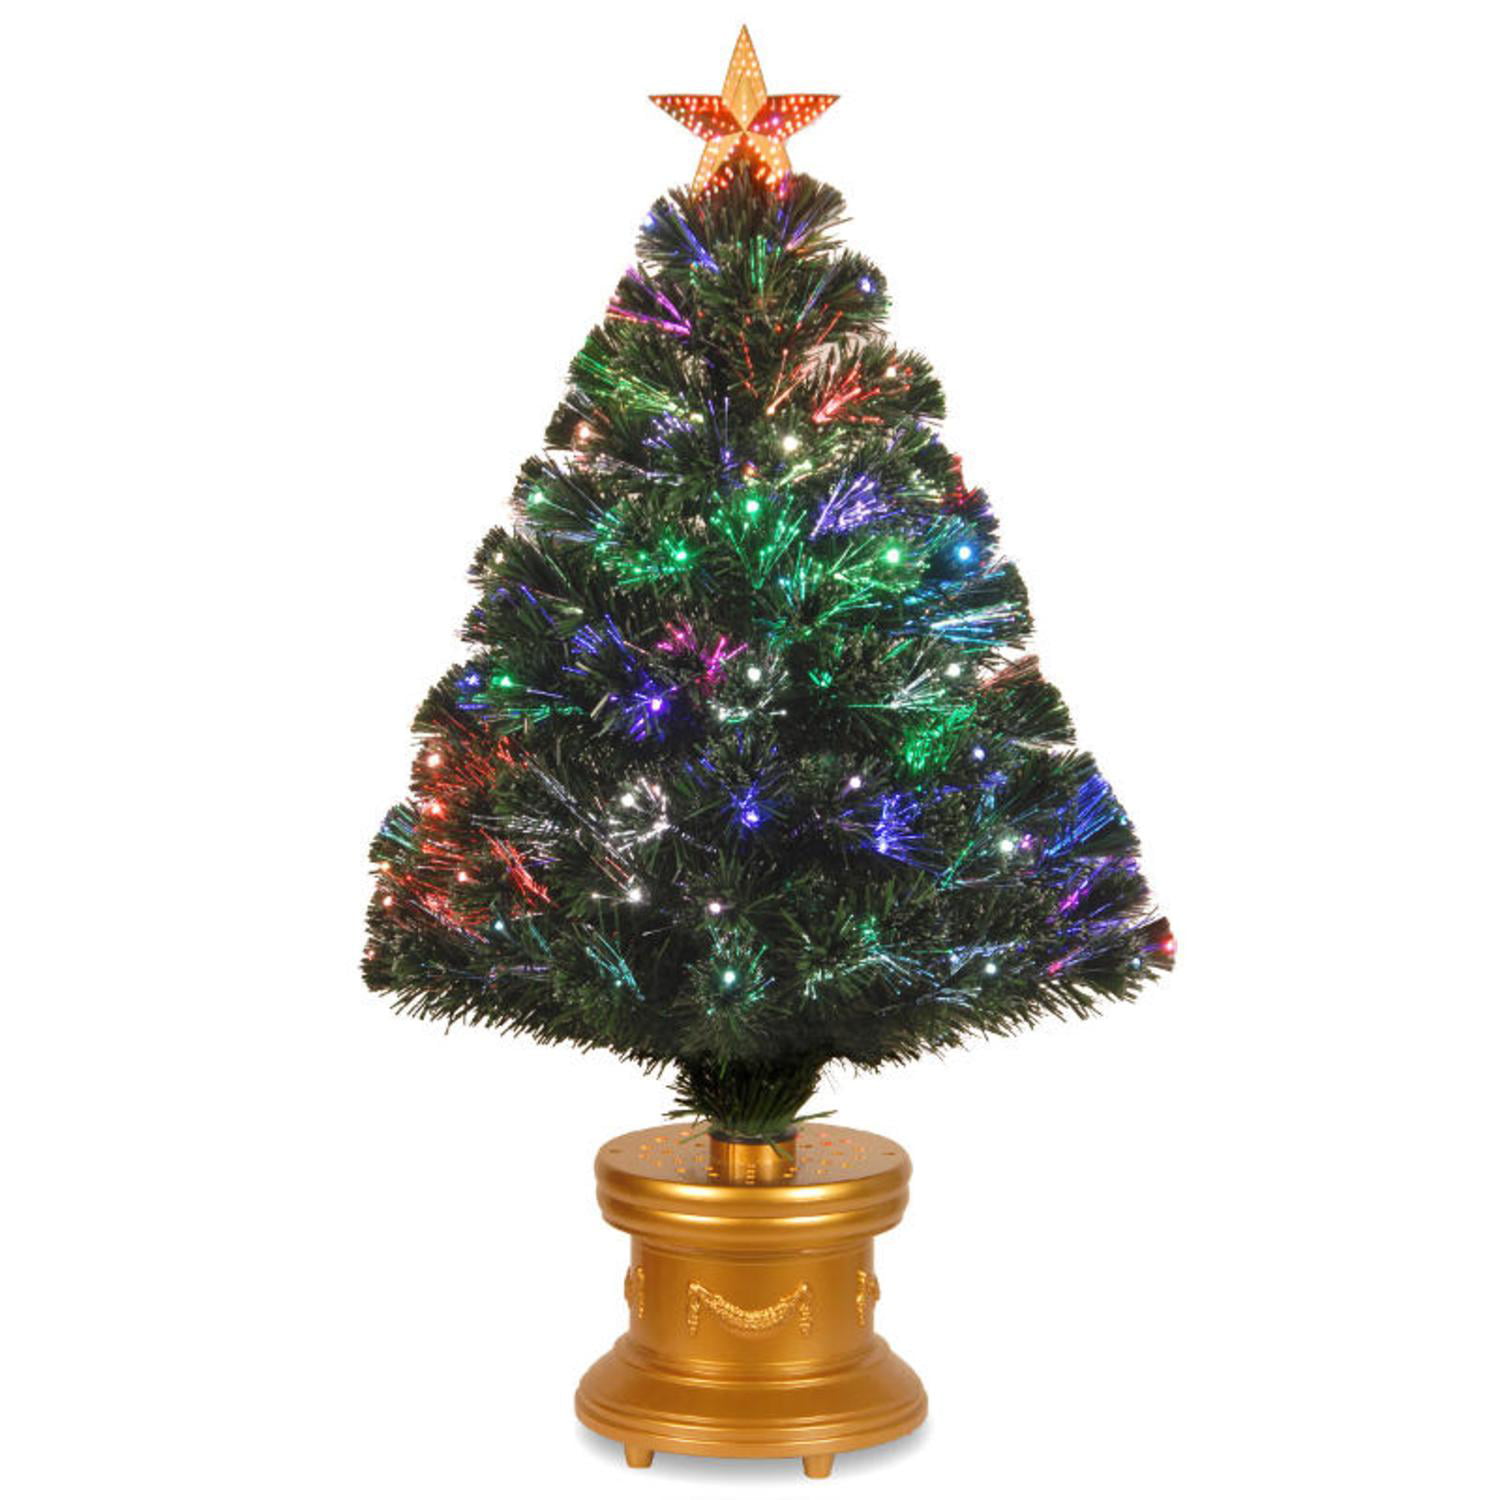 32" Pre-lit Fiber Optic Radiance Fireworks Artificial Christmas Tree